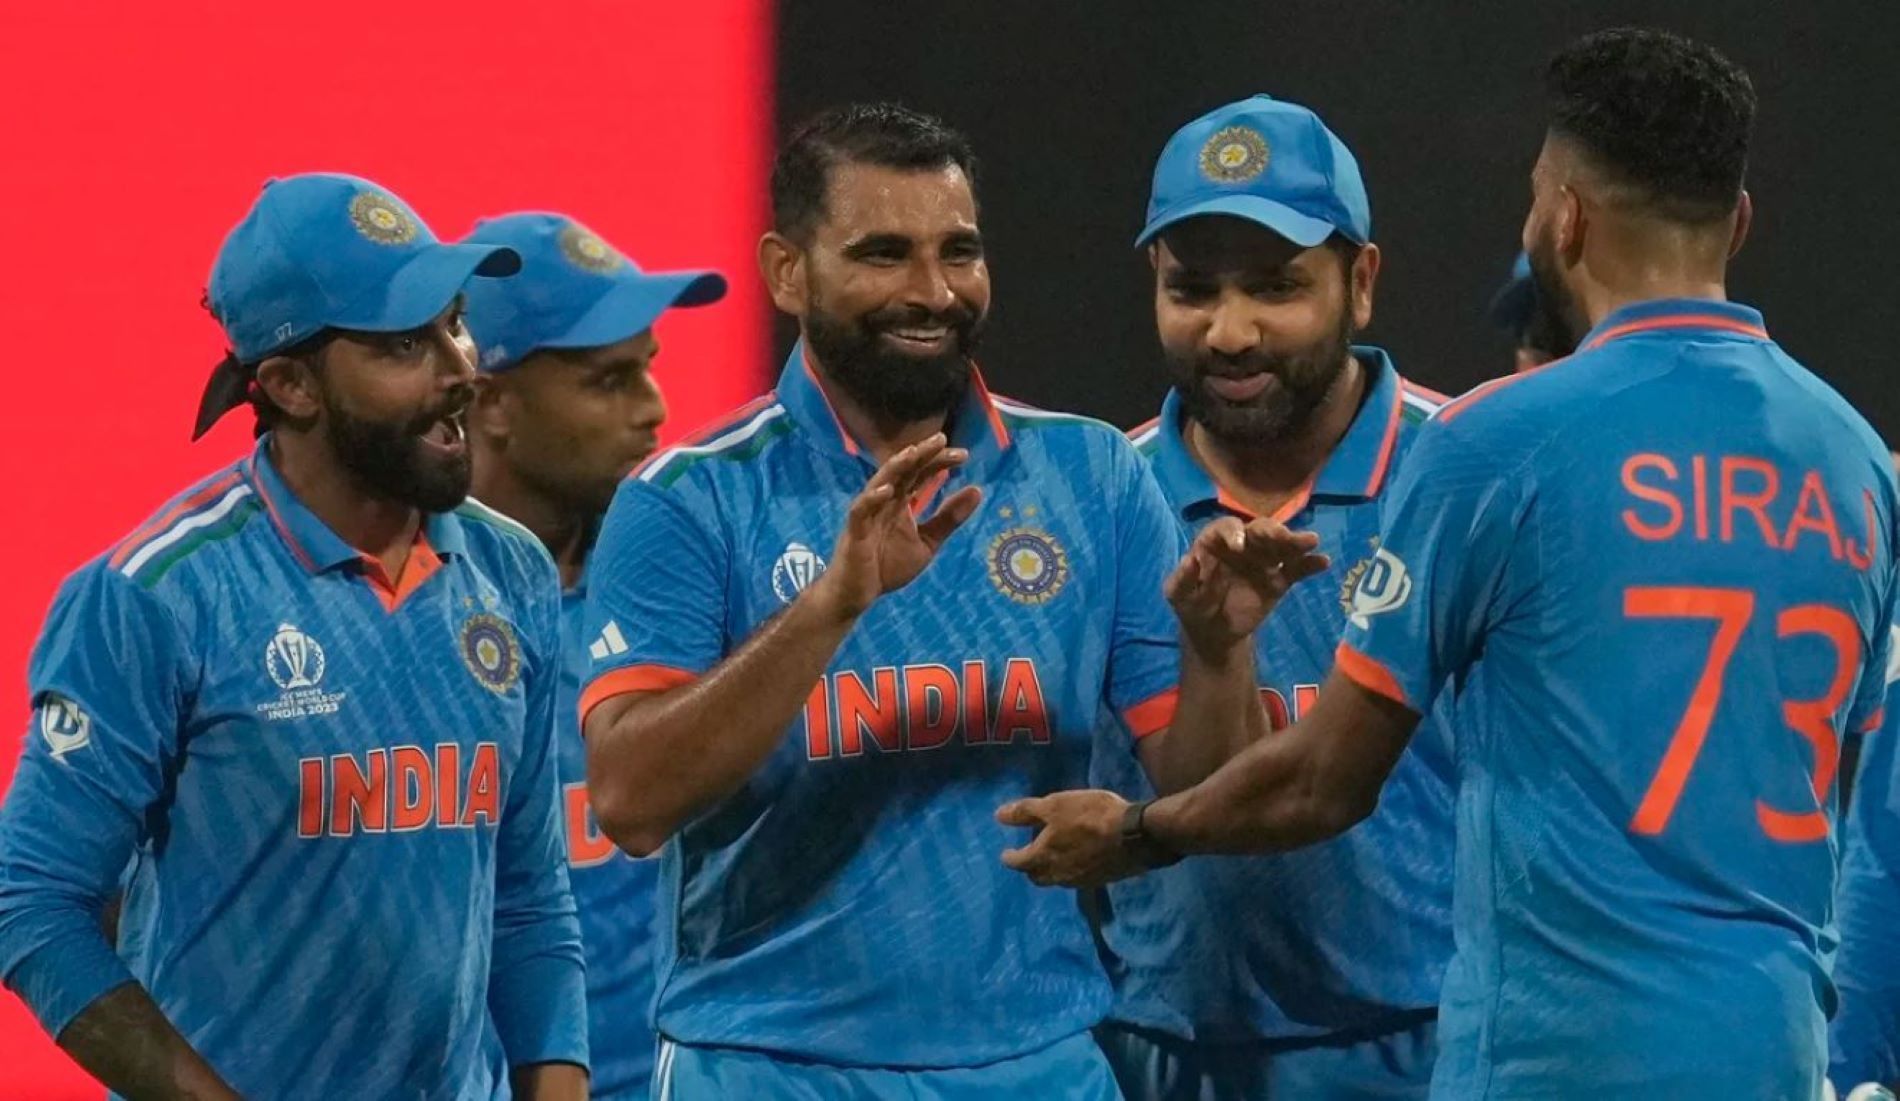 Team India demolished Sri Lanka to book their spot in the semi-final